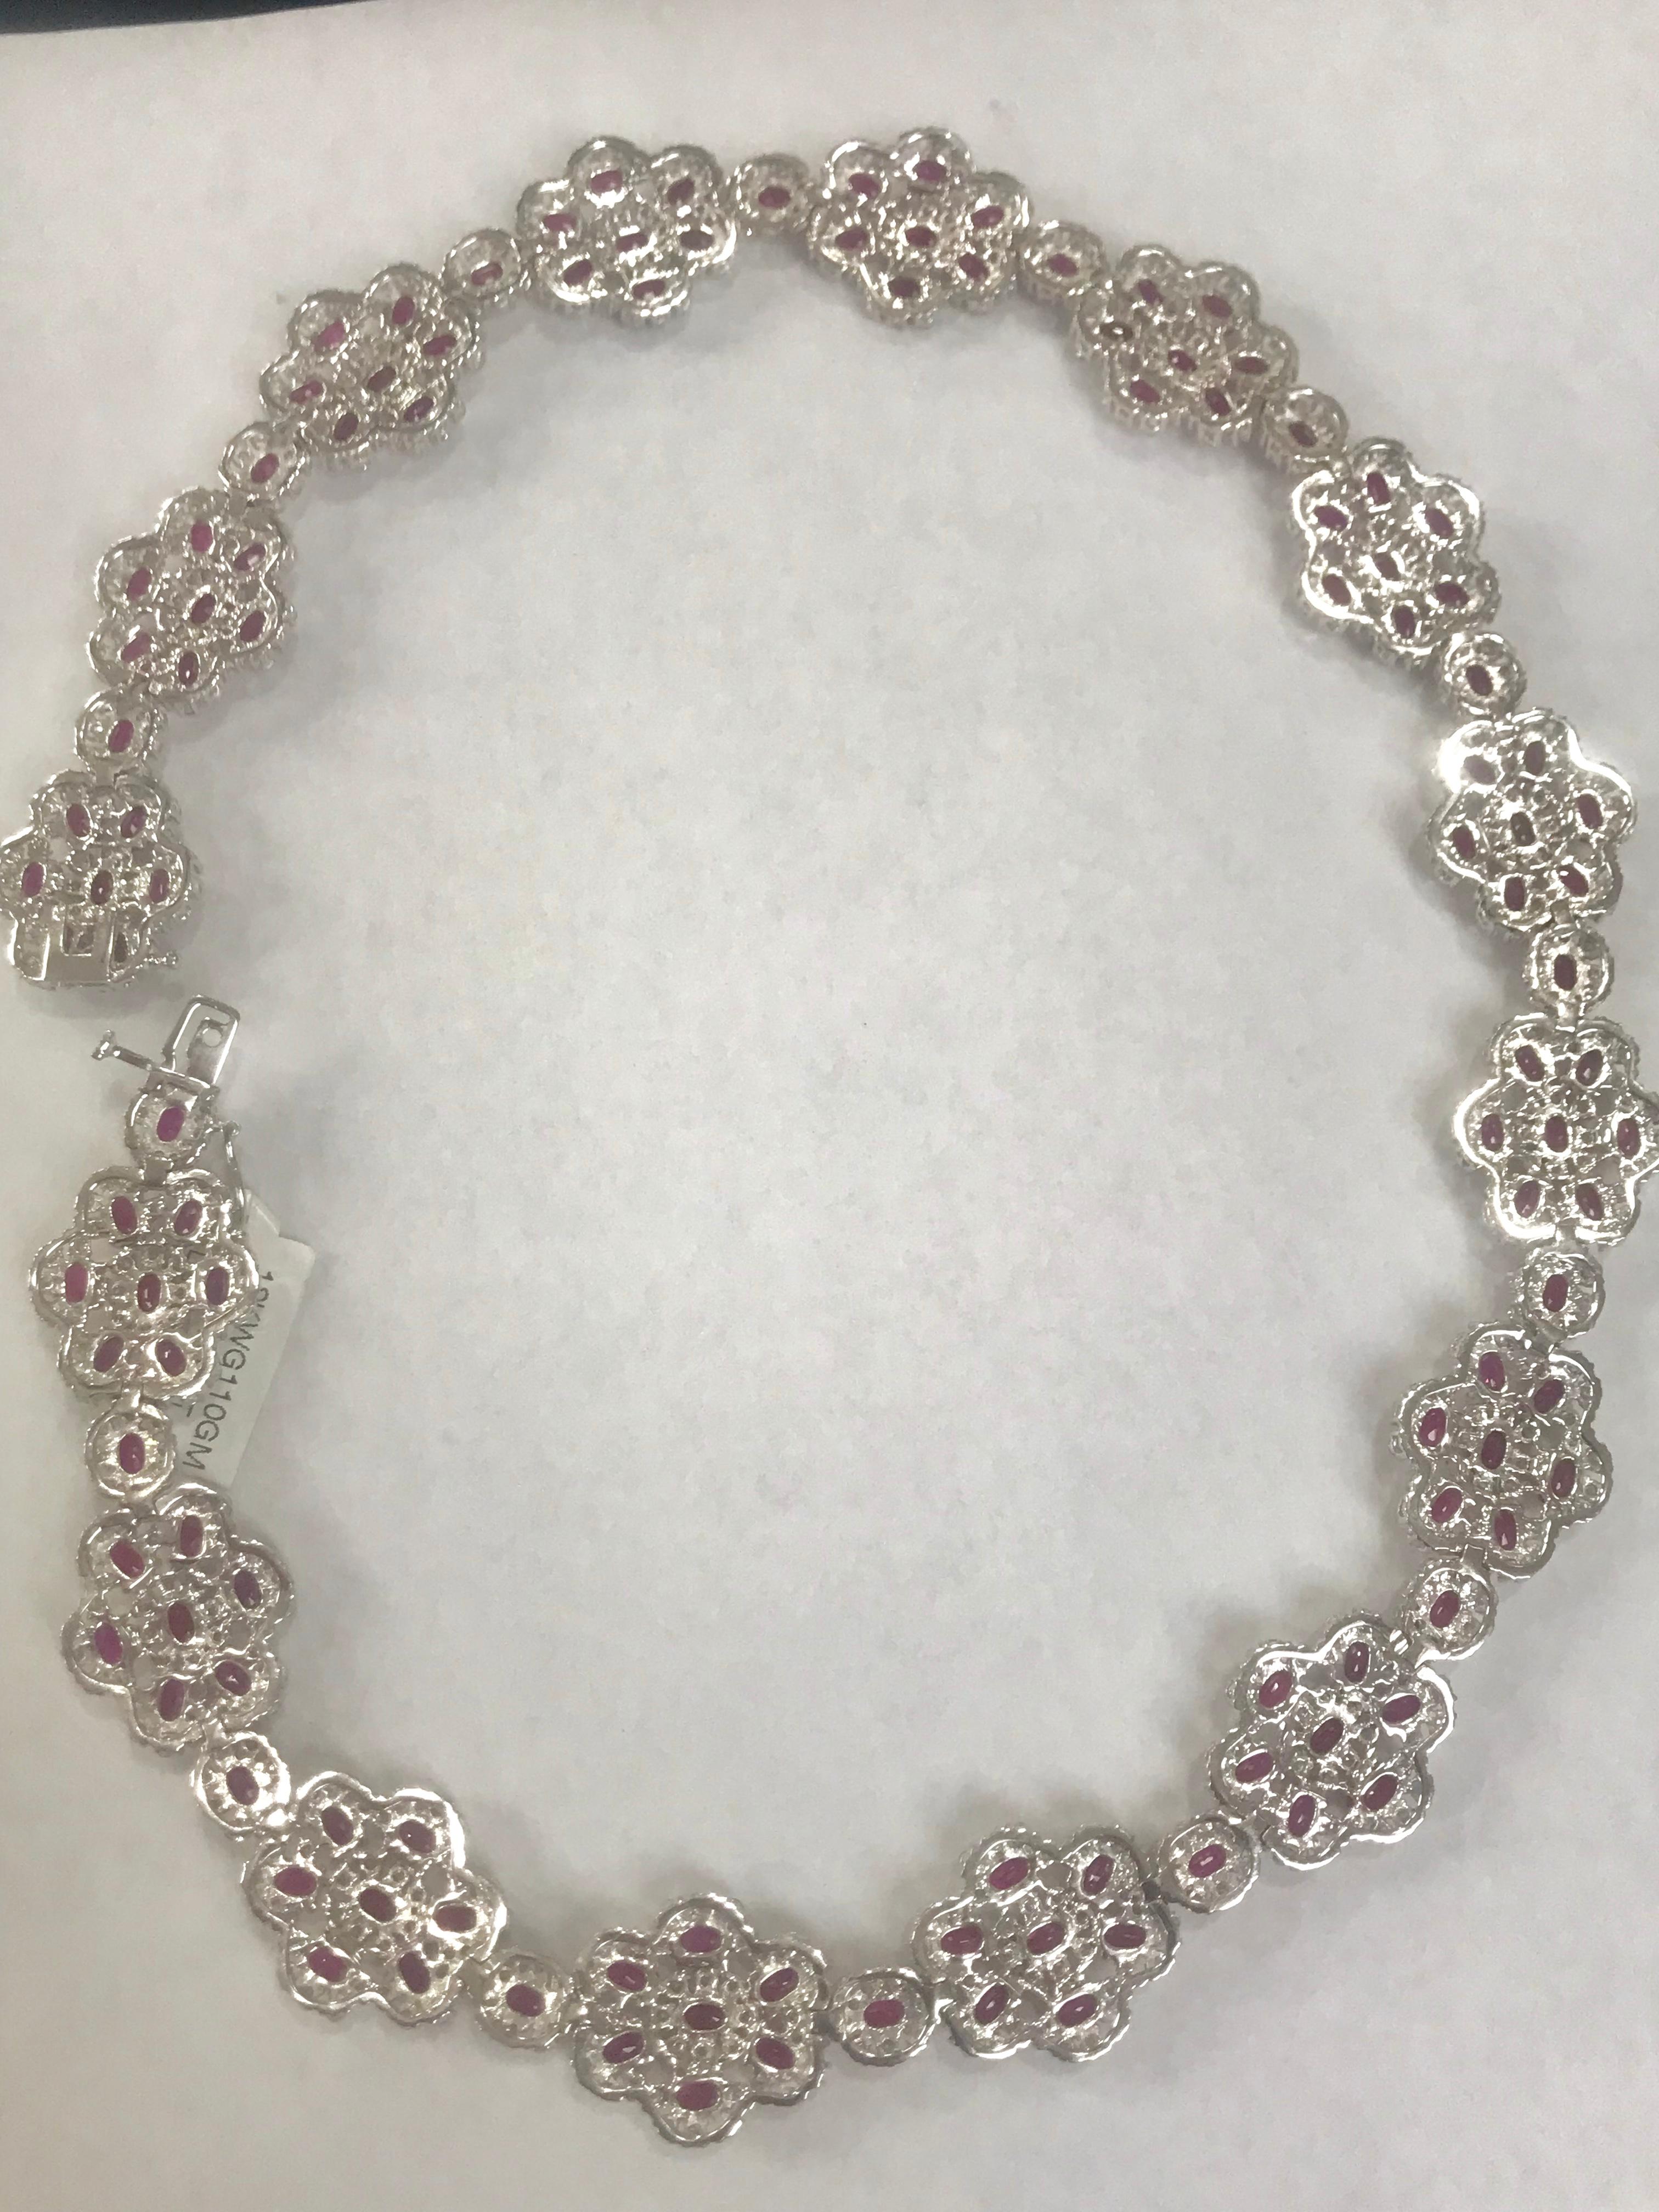 45 Carat Oval Cut Ruby and 28 Carat Diamond Necklace Suite 18 Karat Gold, Bridal For Sale 4